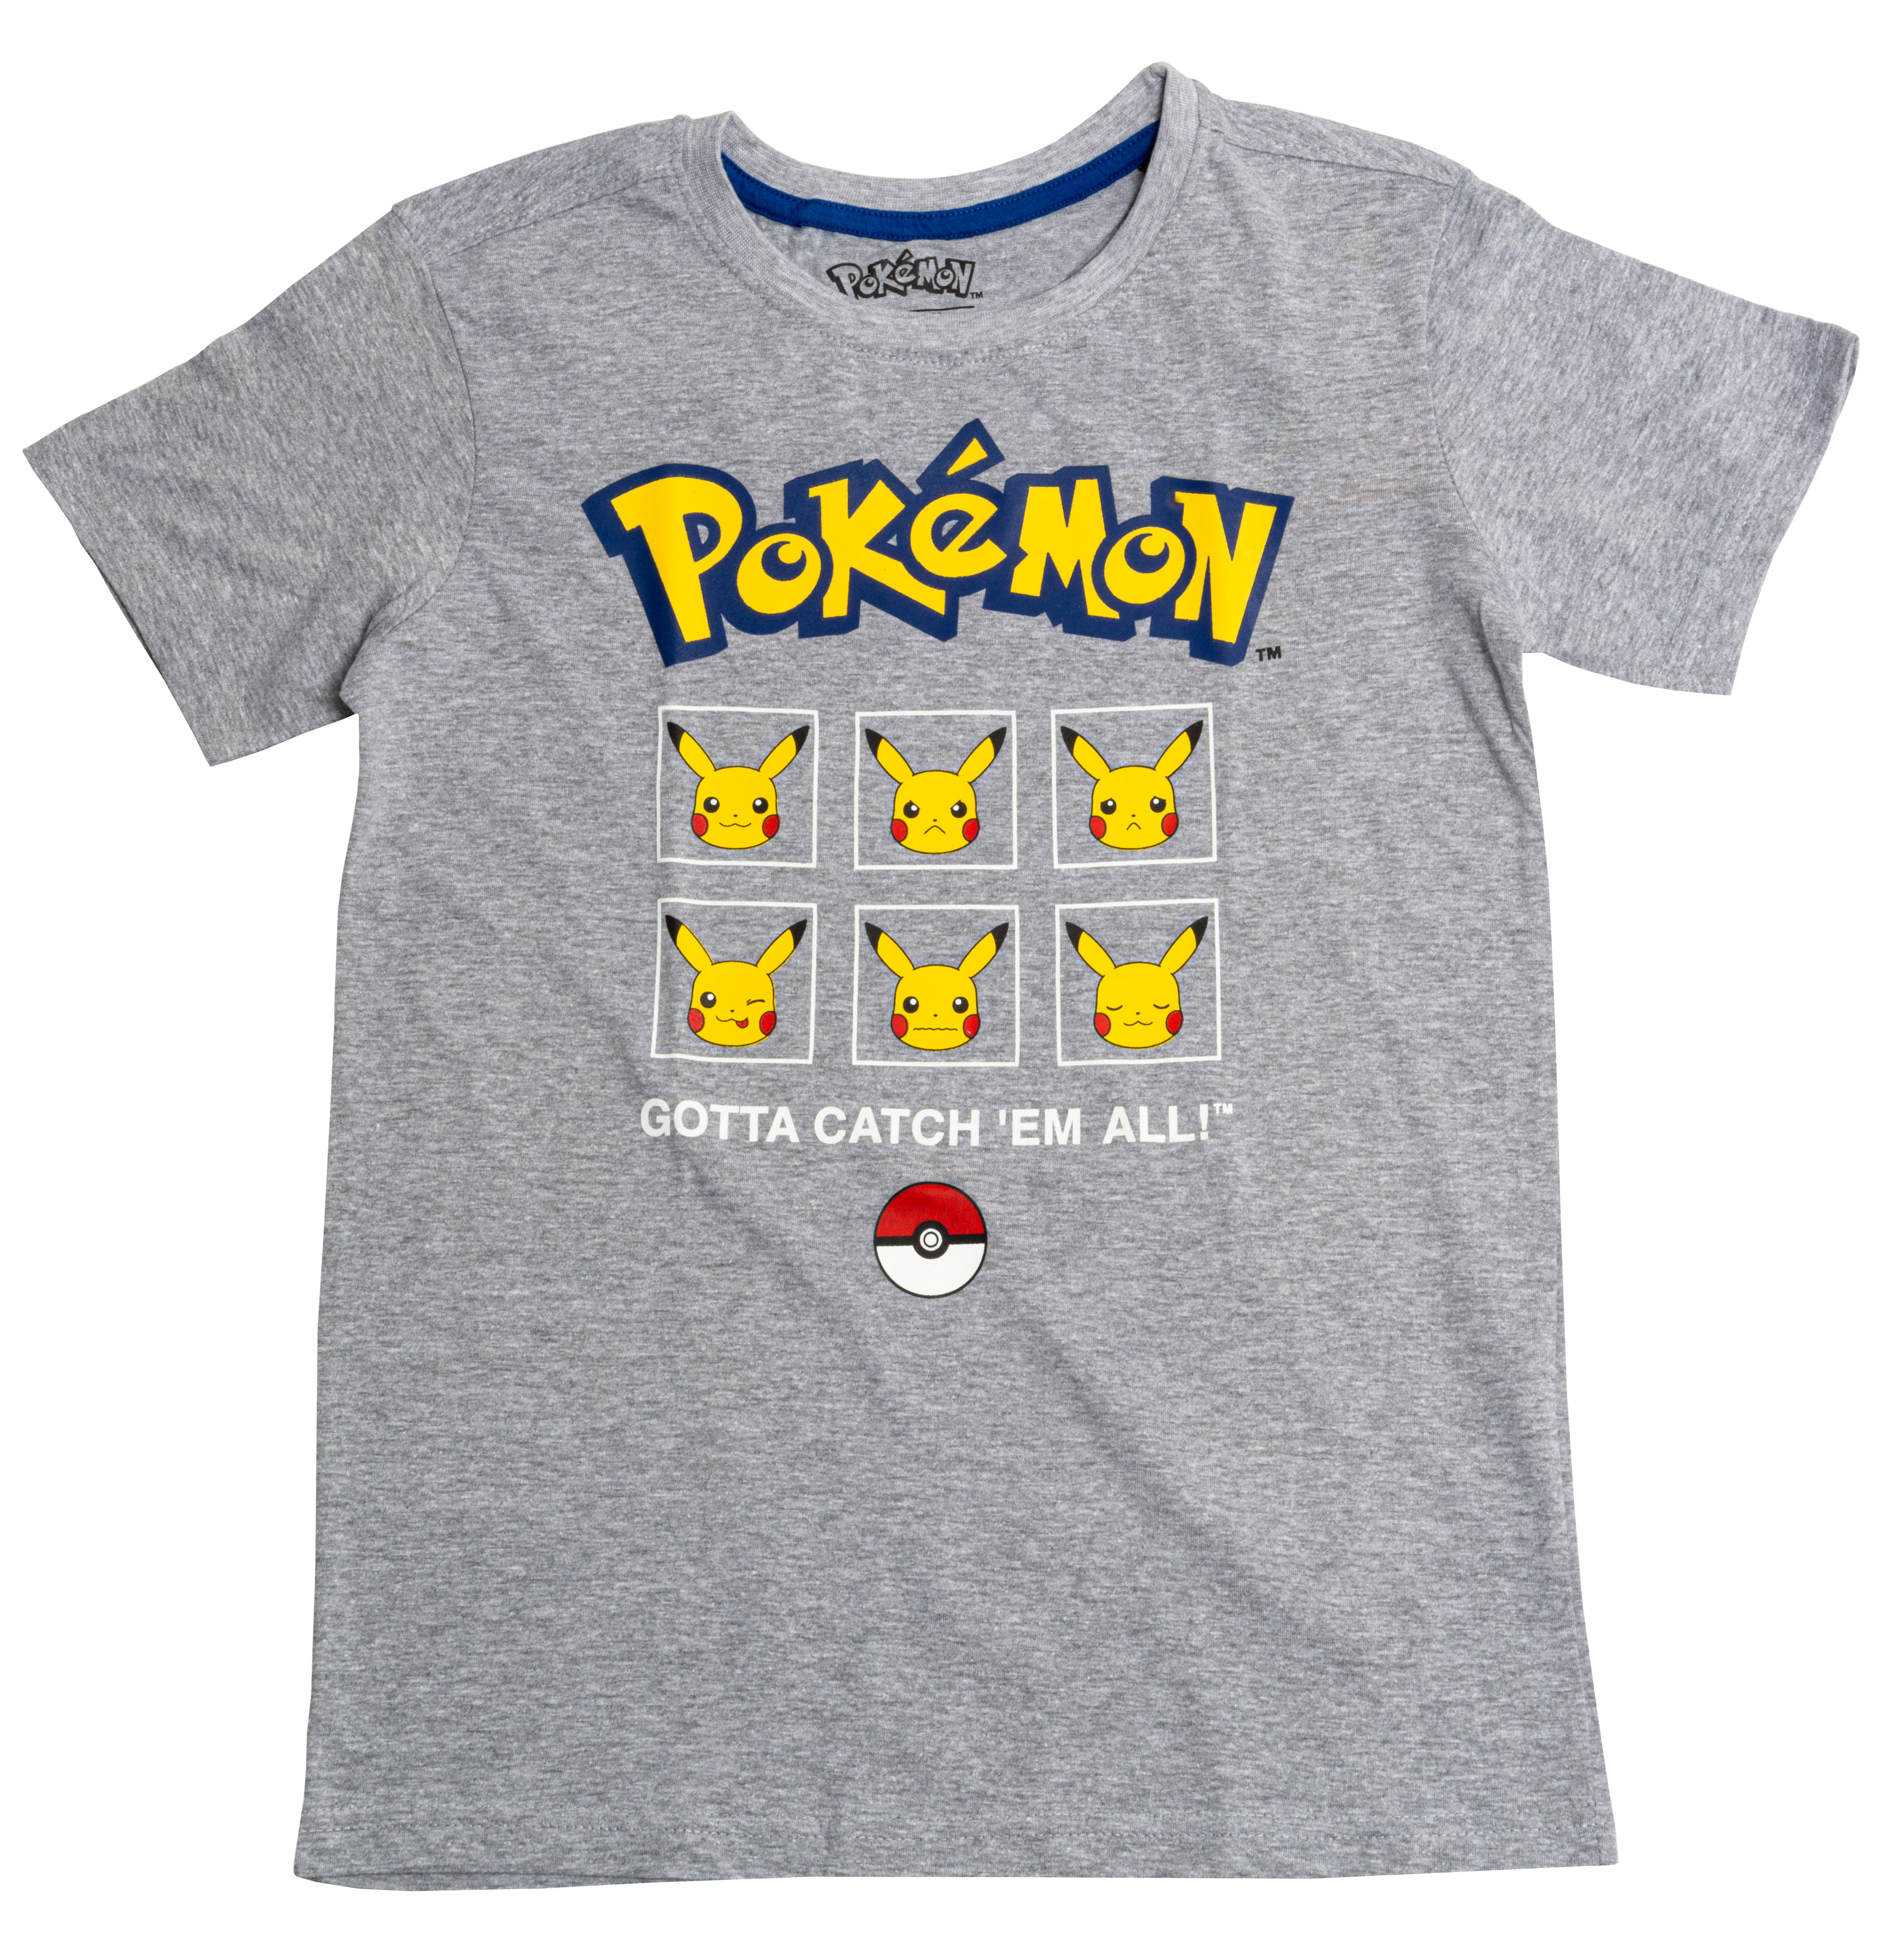 Pokémon - Pika Expressions - Boys T-Shirt Gr. 110/116